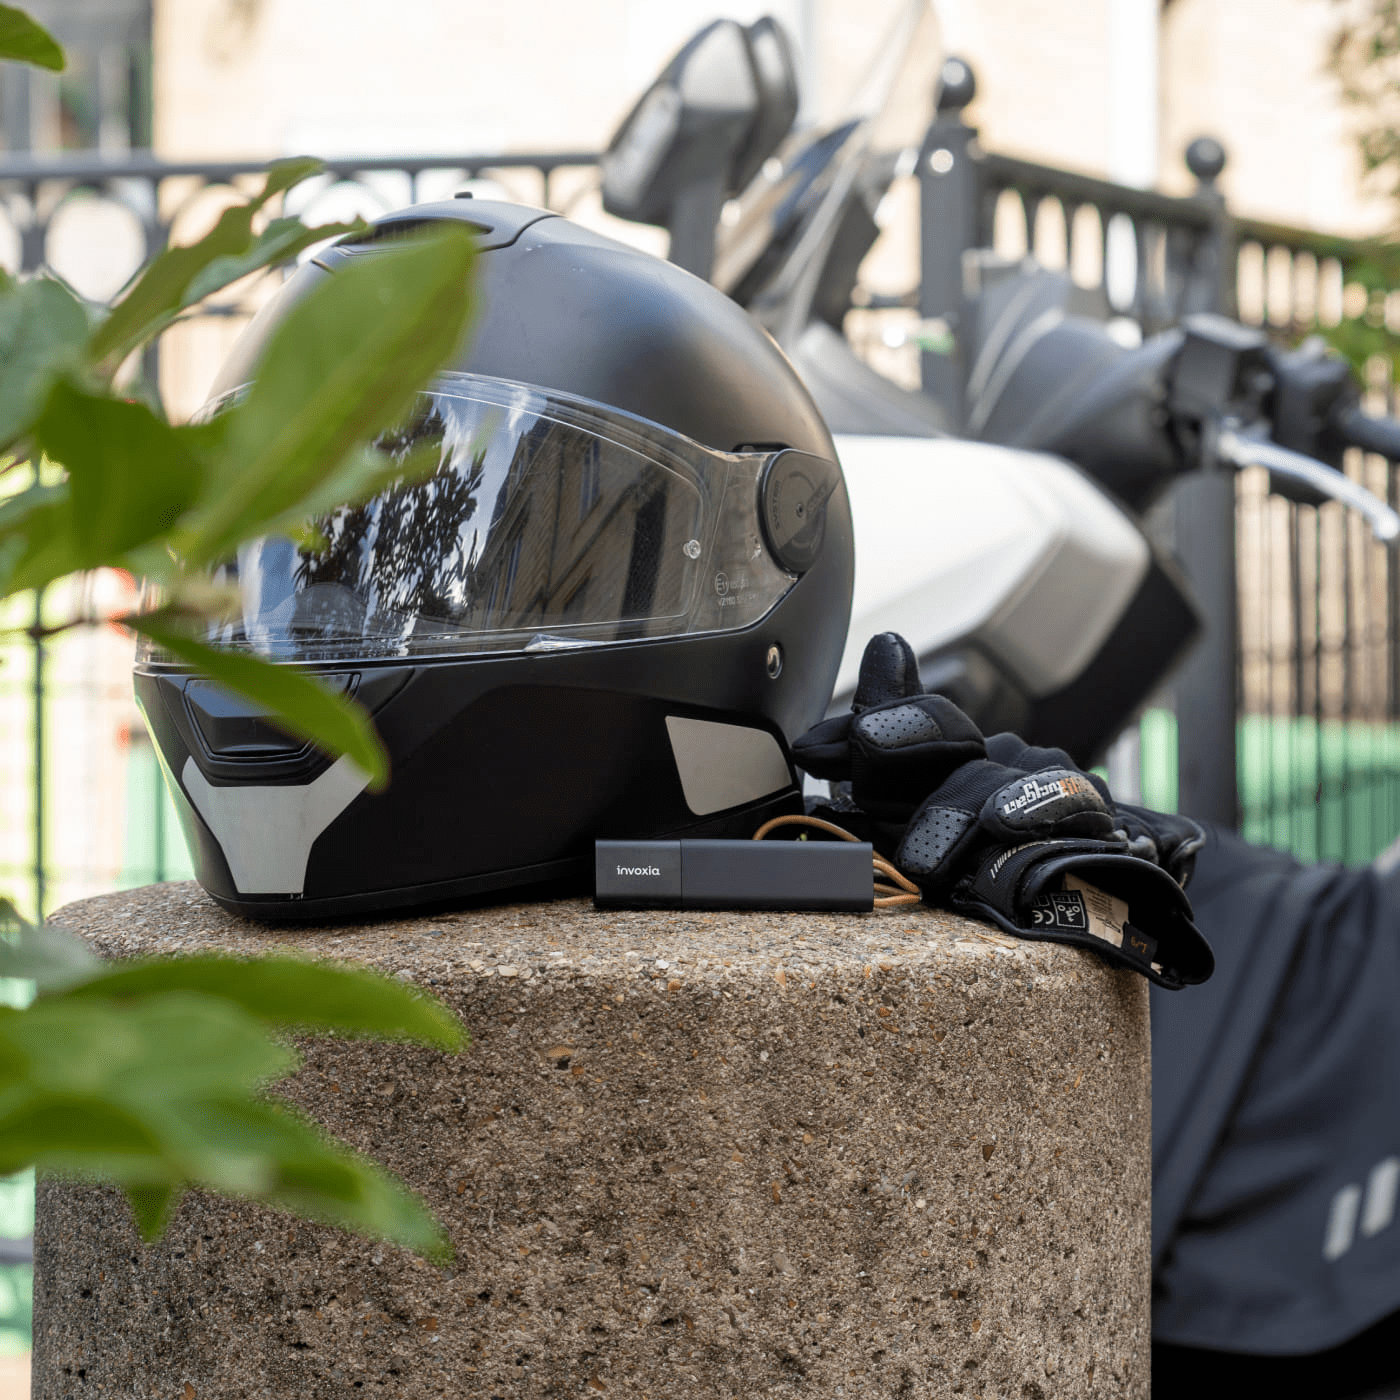 Pochette étanche pour tracker GPS invoxia moto : , tracker  gps de moto